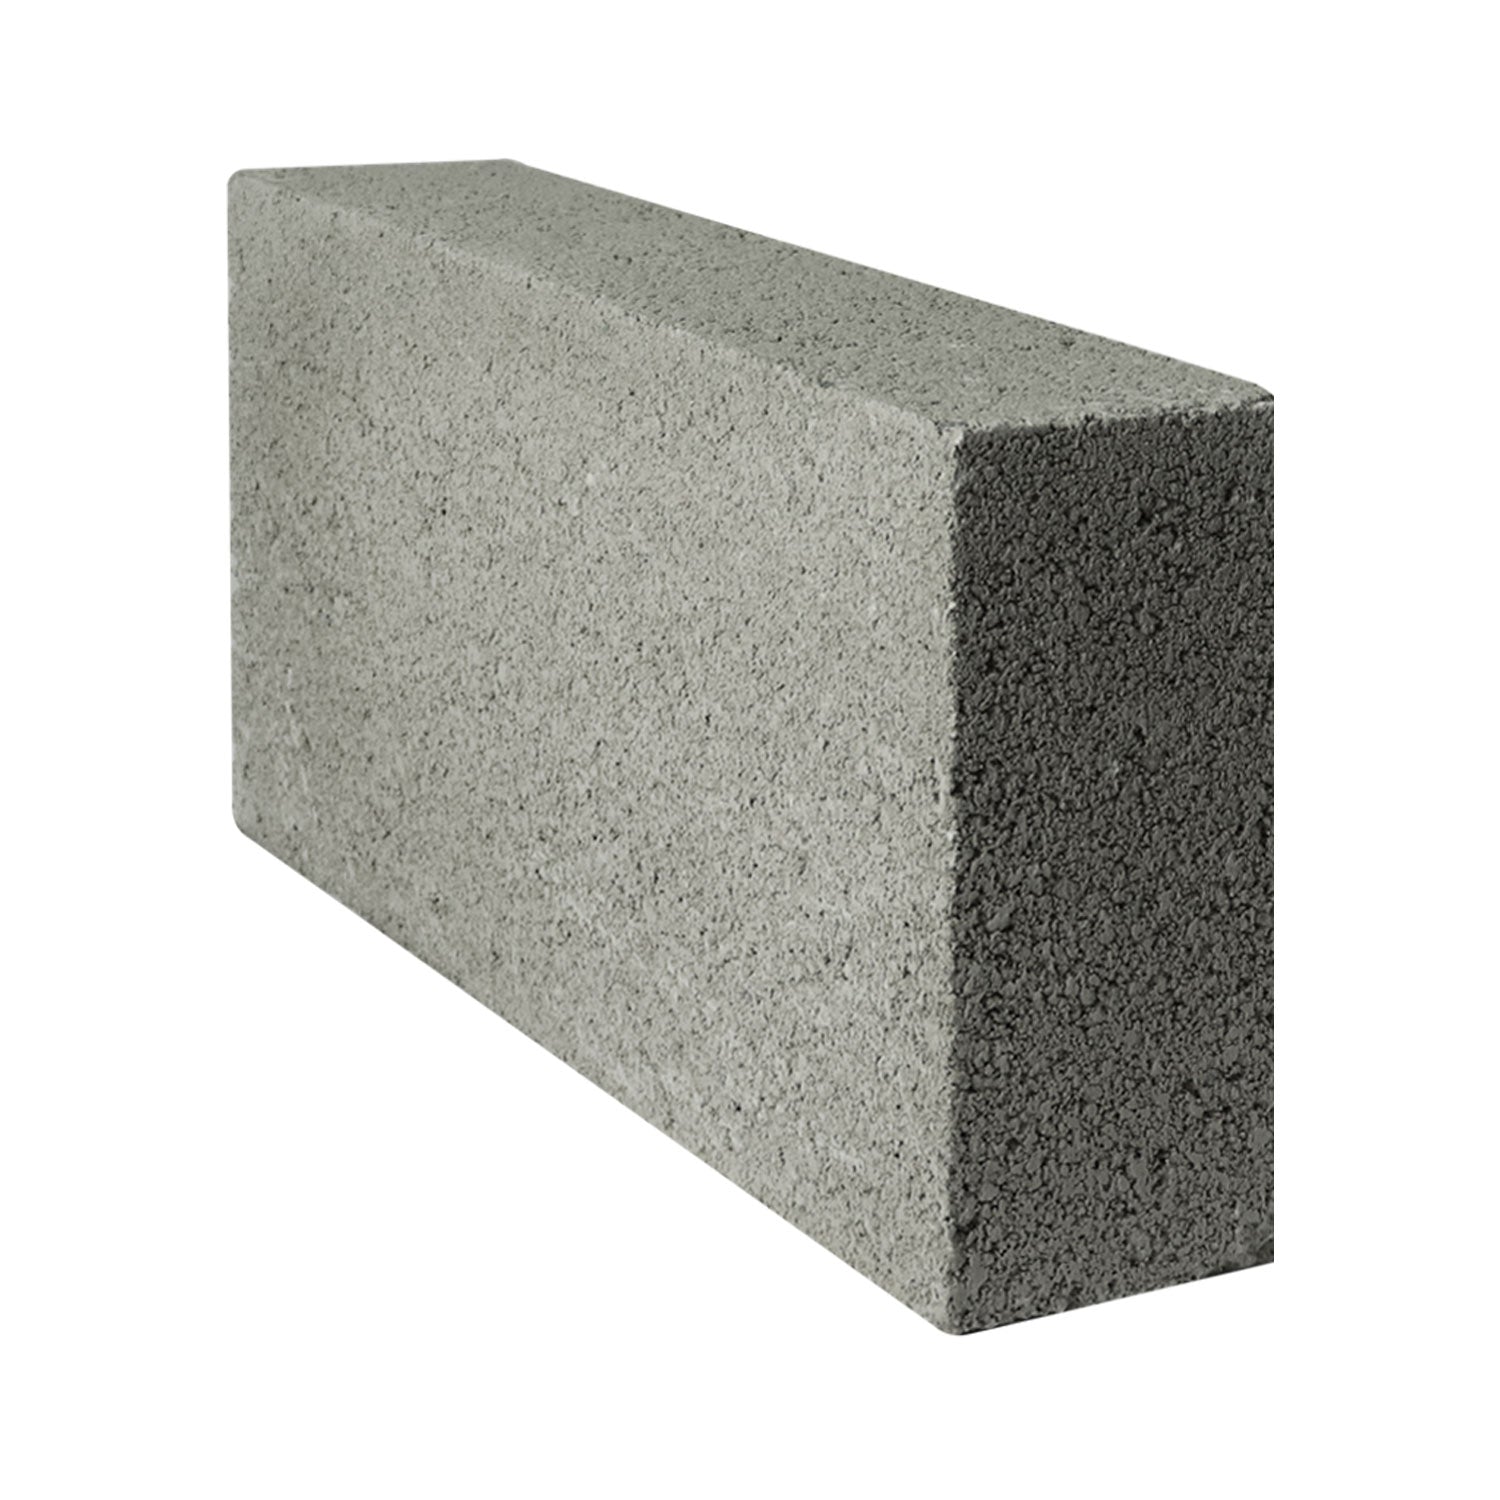 Concrete Block 100mm